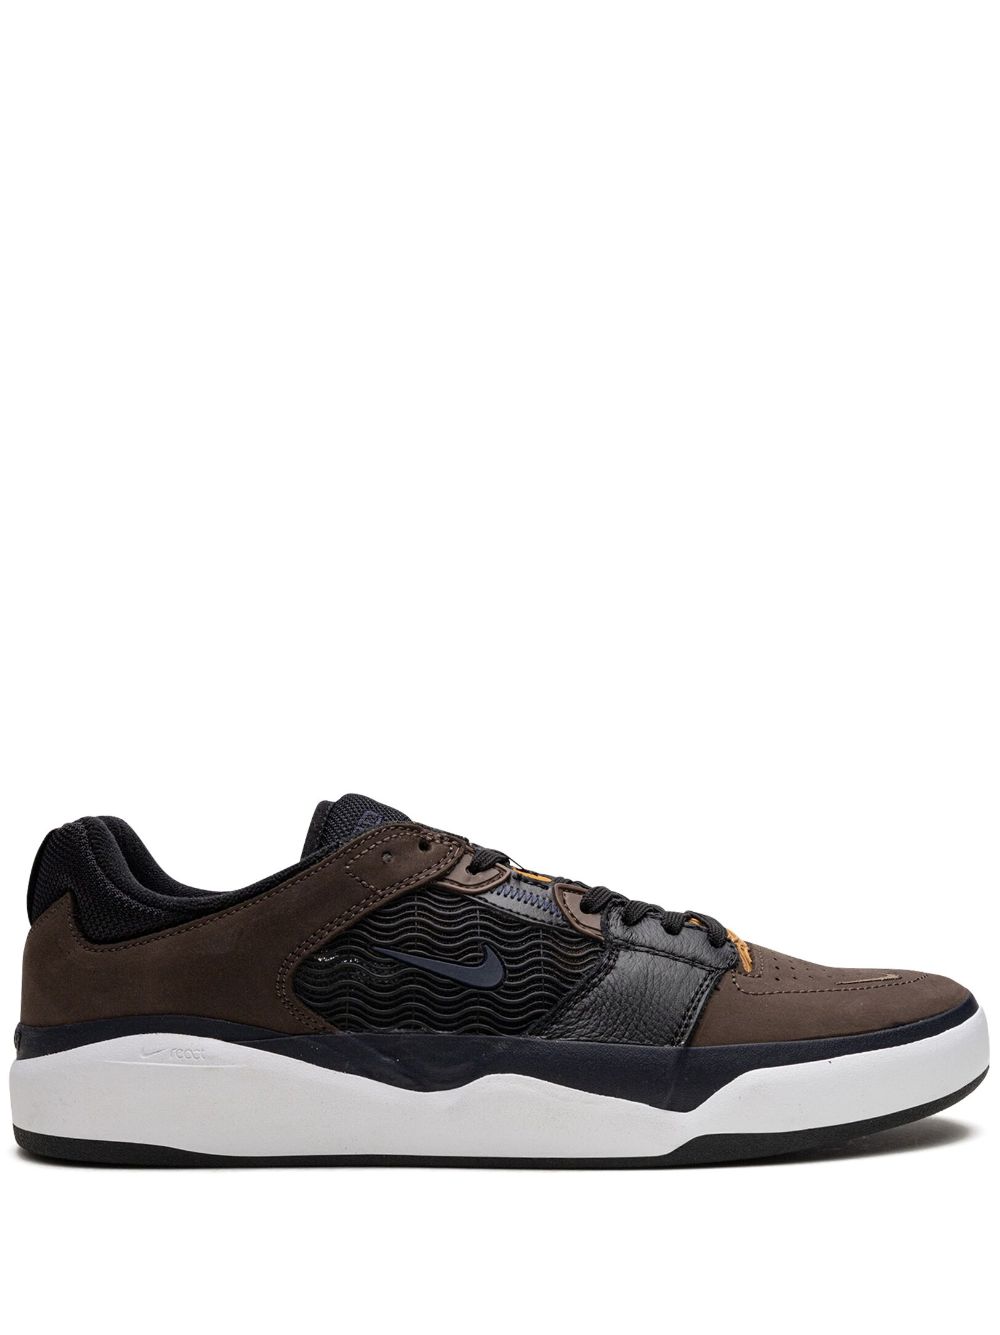 Nike Sb Ishod Wair Premium Sneakers In Brown